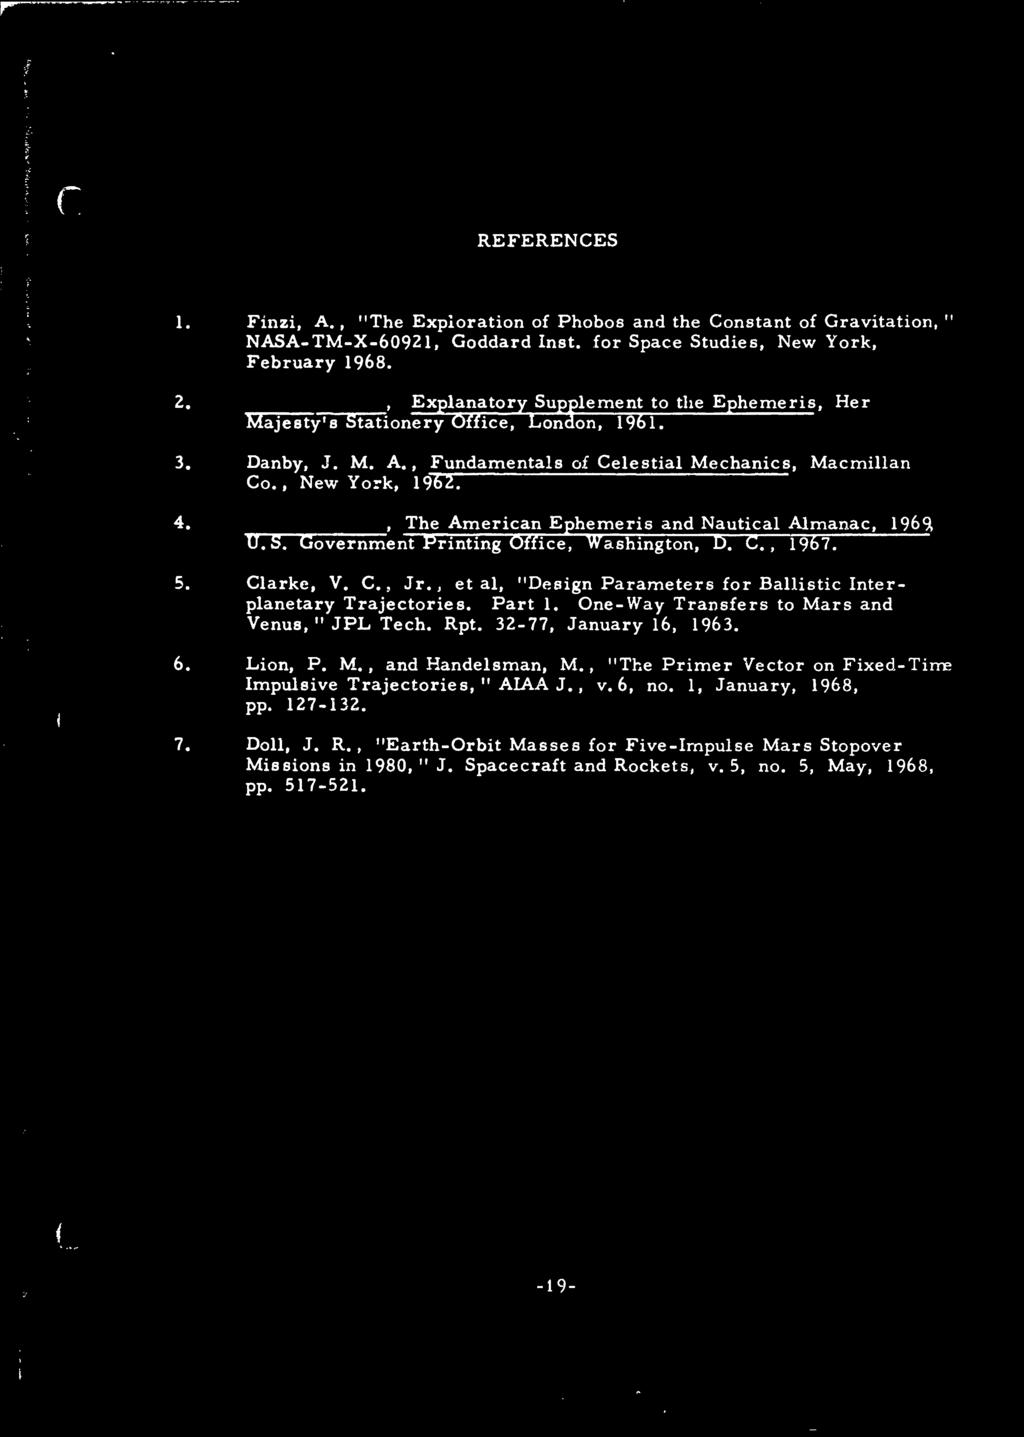 , The American Ephemeris and Nautical Almanac, 196% U.S. Government Printing Office, Washington, D. C., 1967. 5. Clarke, V. C. s Jr.